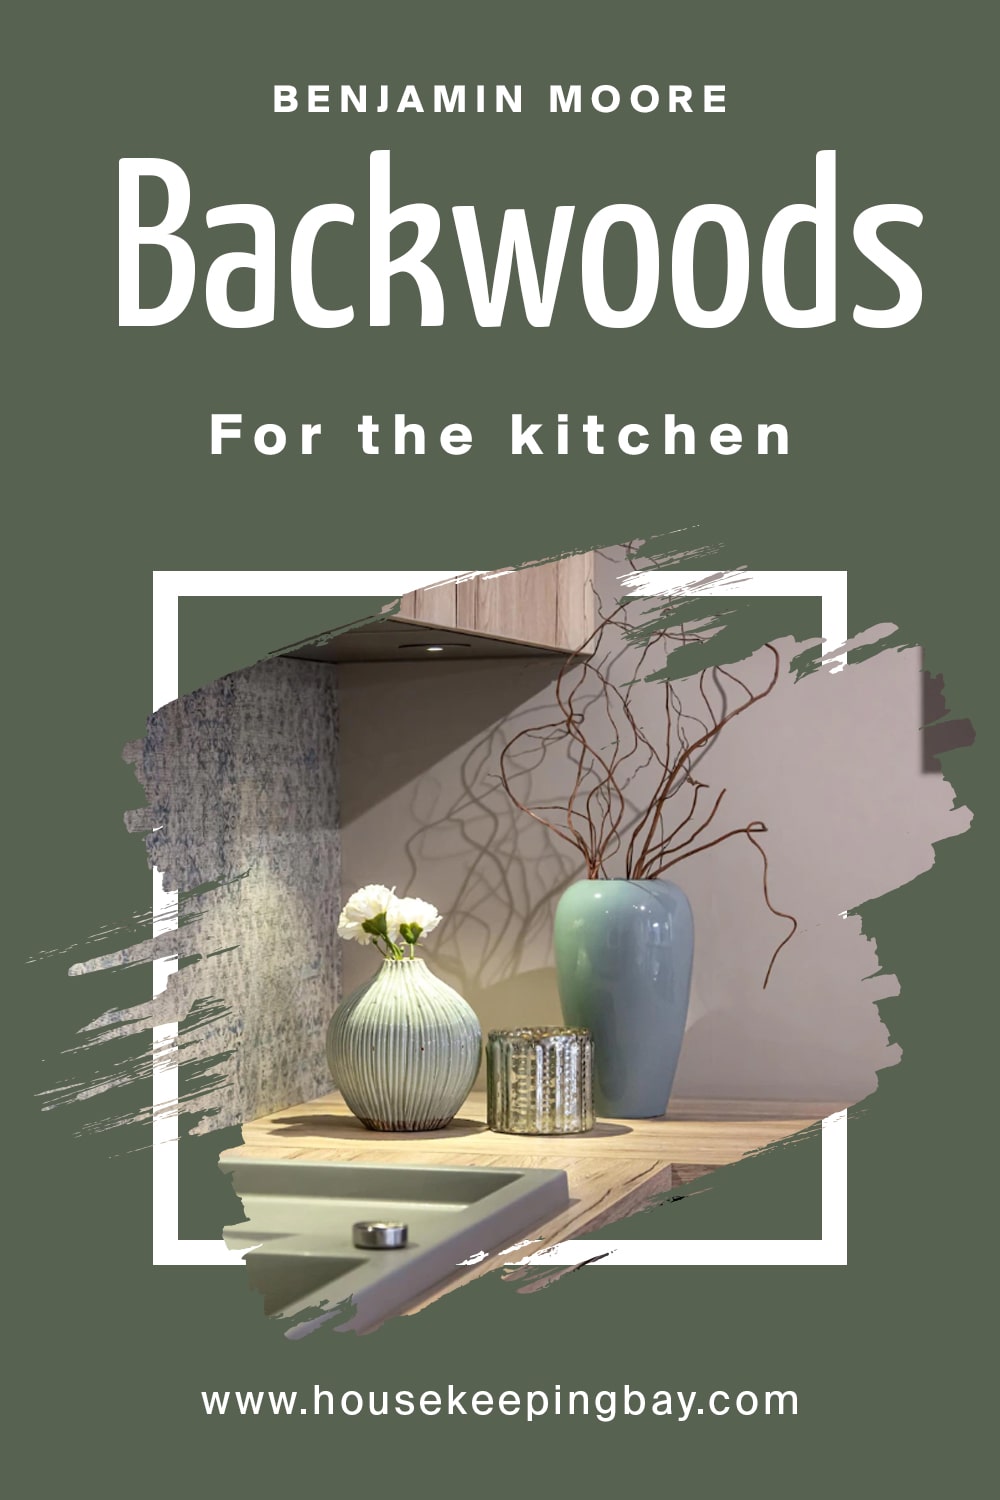 Benjamin Moore. Backwoods for the kitchen